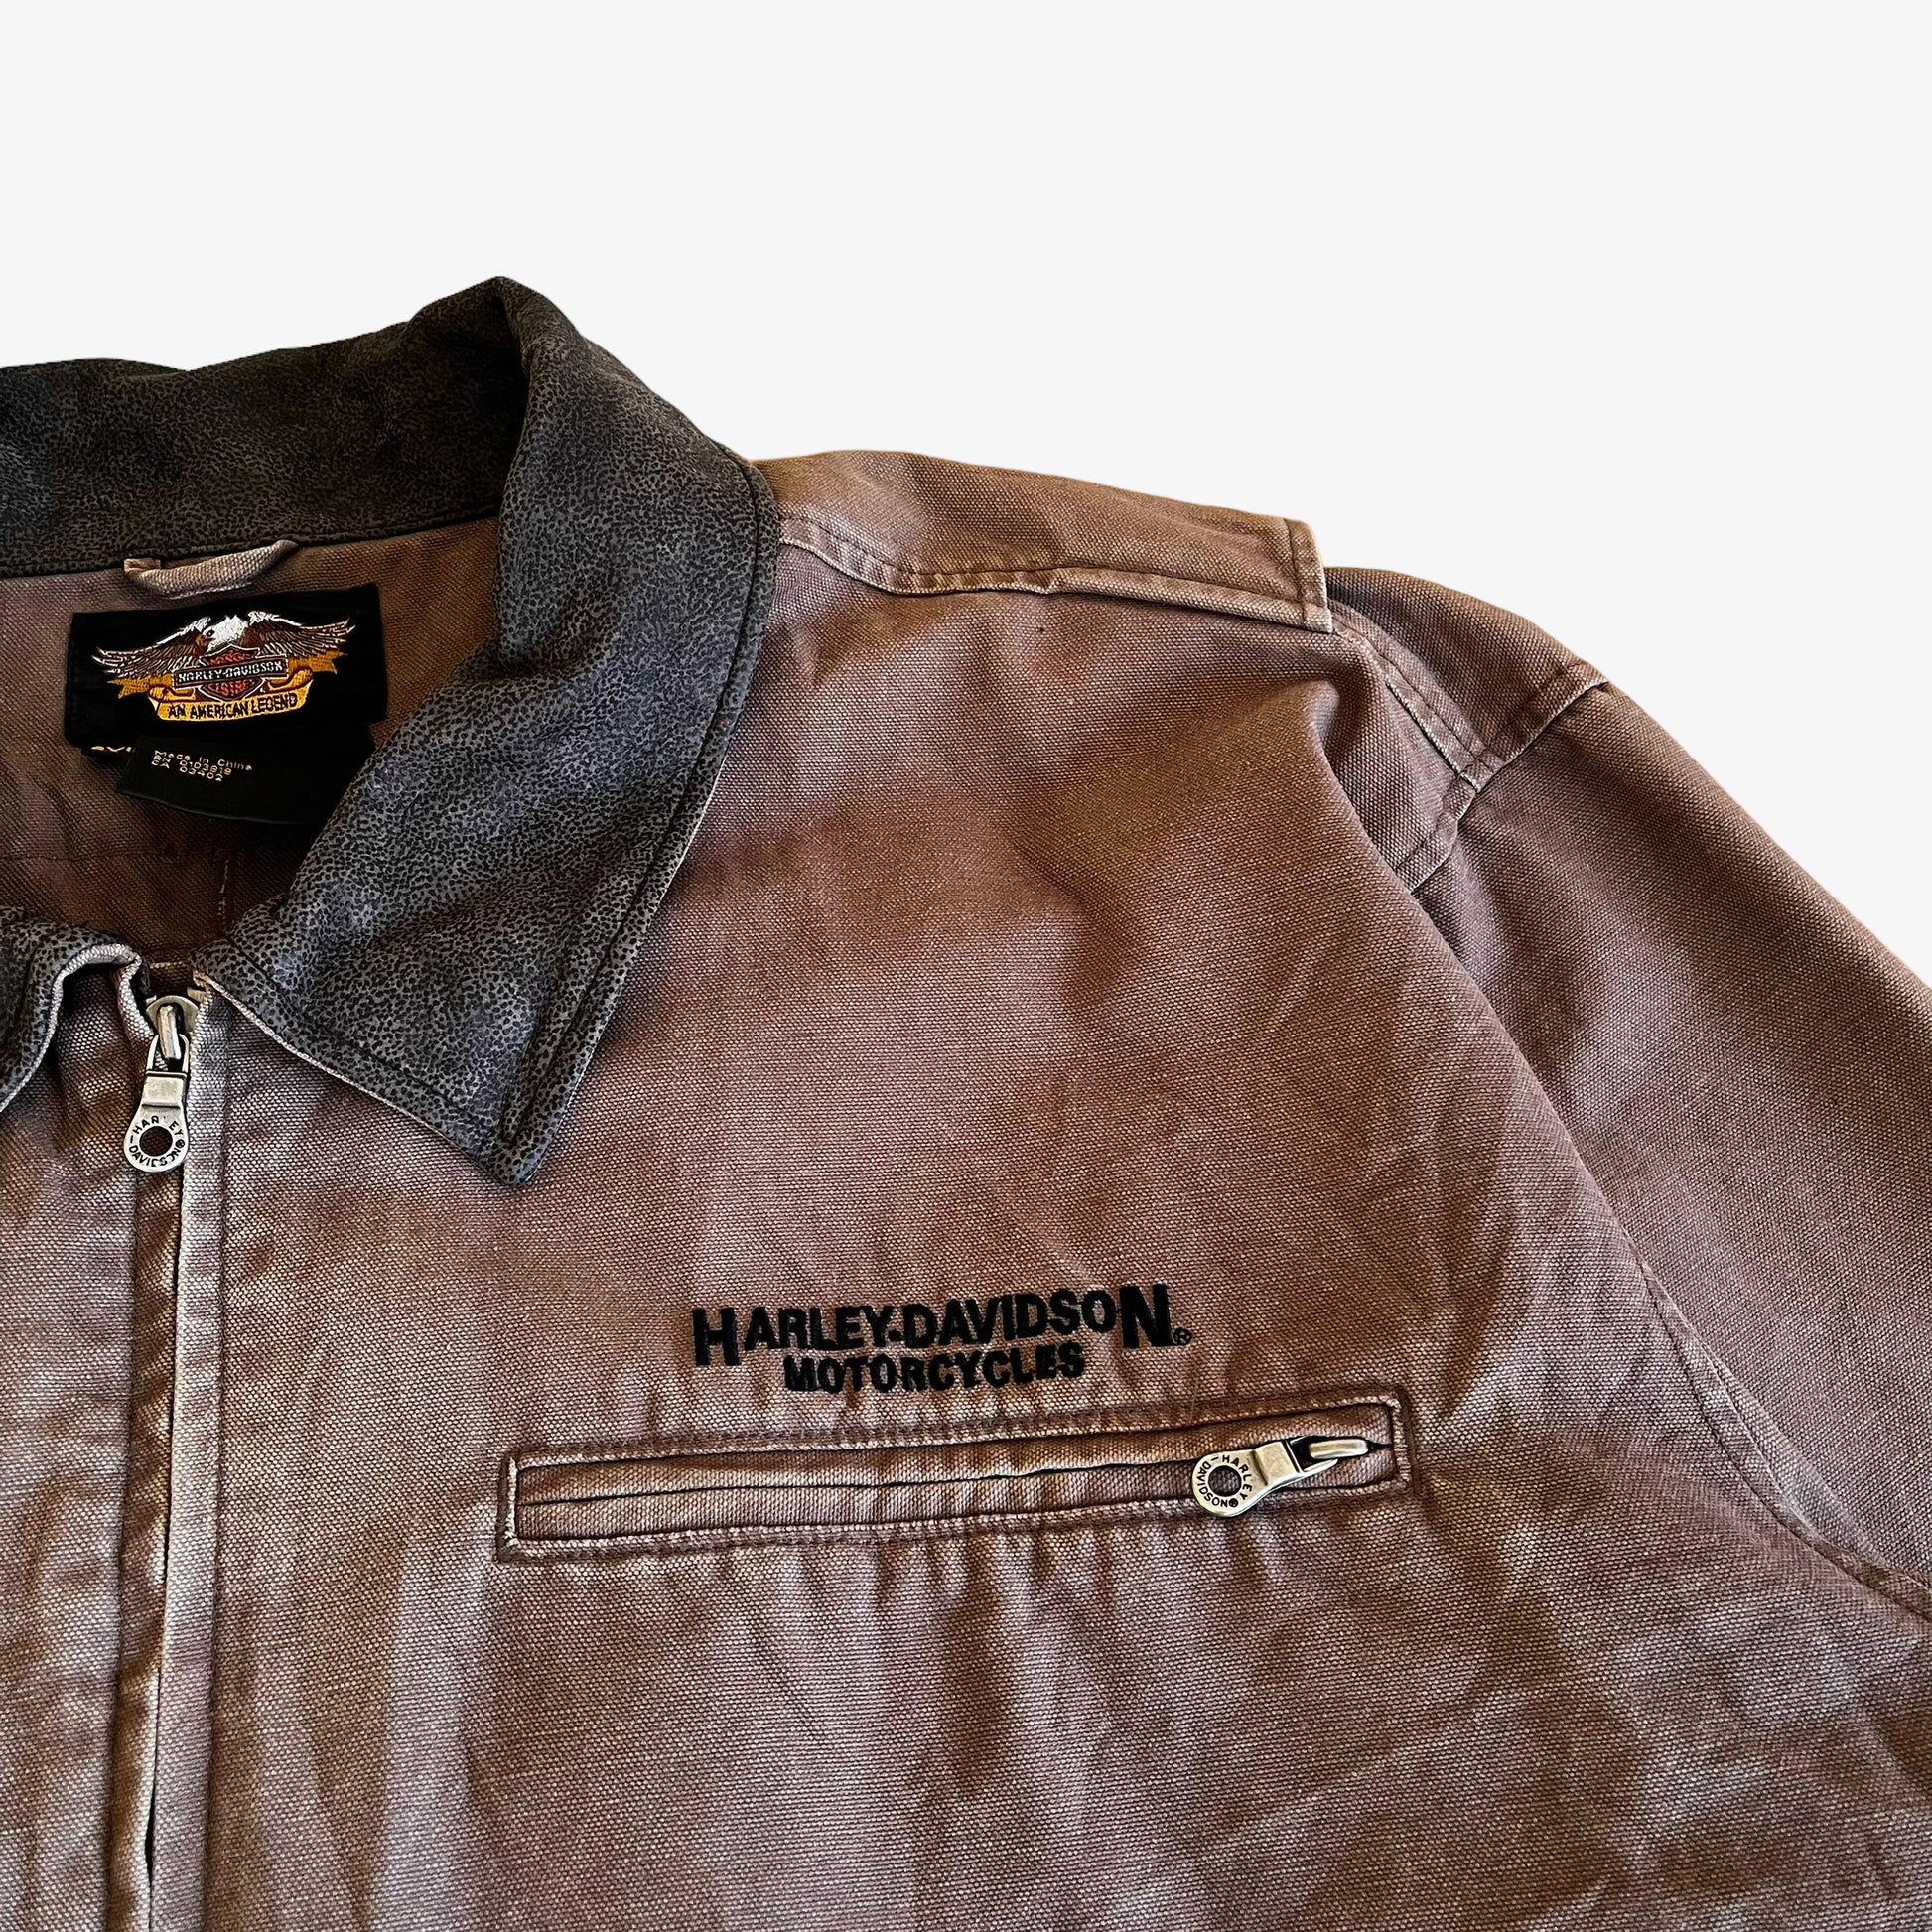 Vintage 90s Harley Davidson Workwear Jacket With Leather Collar Pocket - Casspios Dream